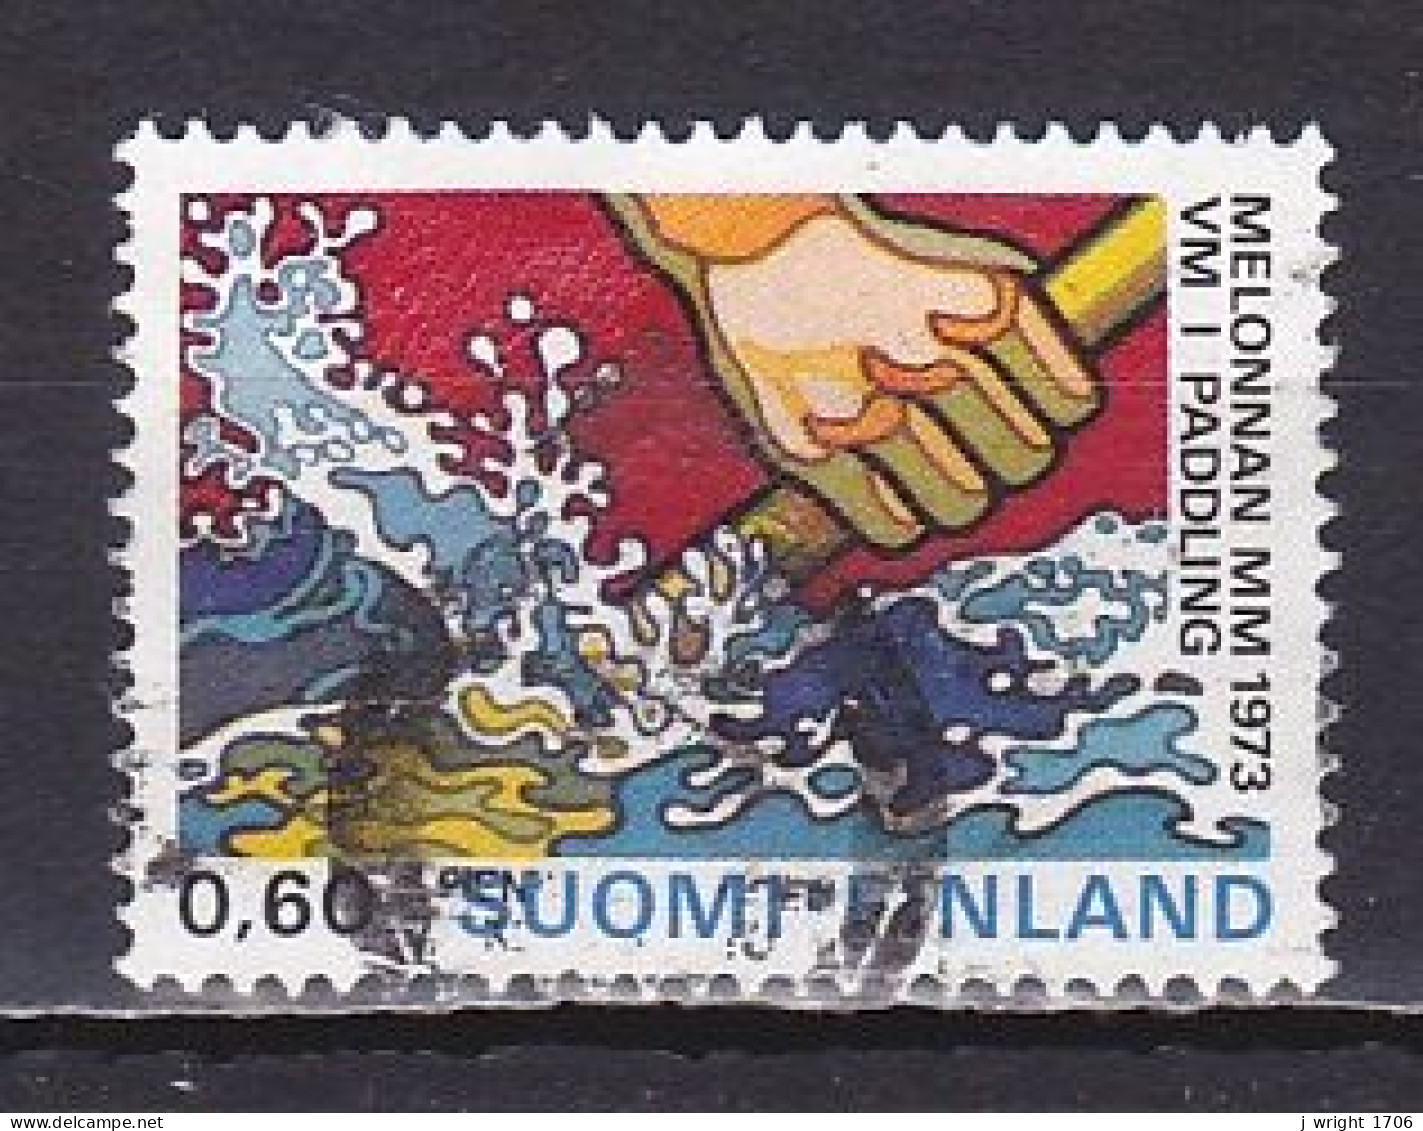 Finland, 1973, World Canoeing Championships, 0.60mk, USED - Usados